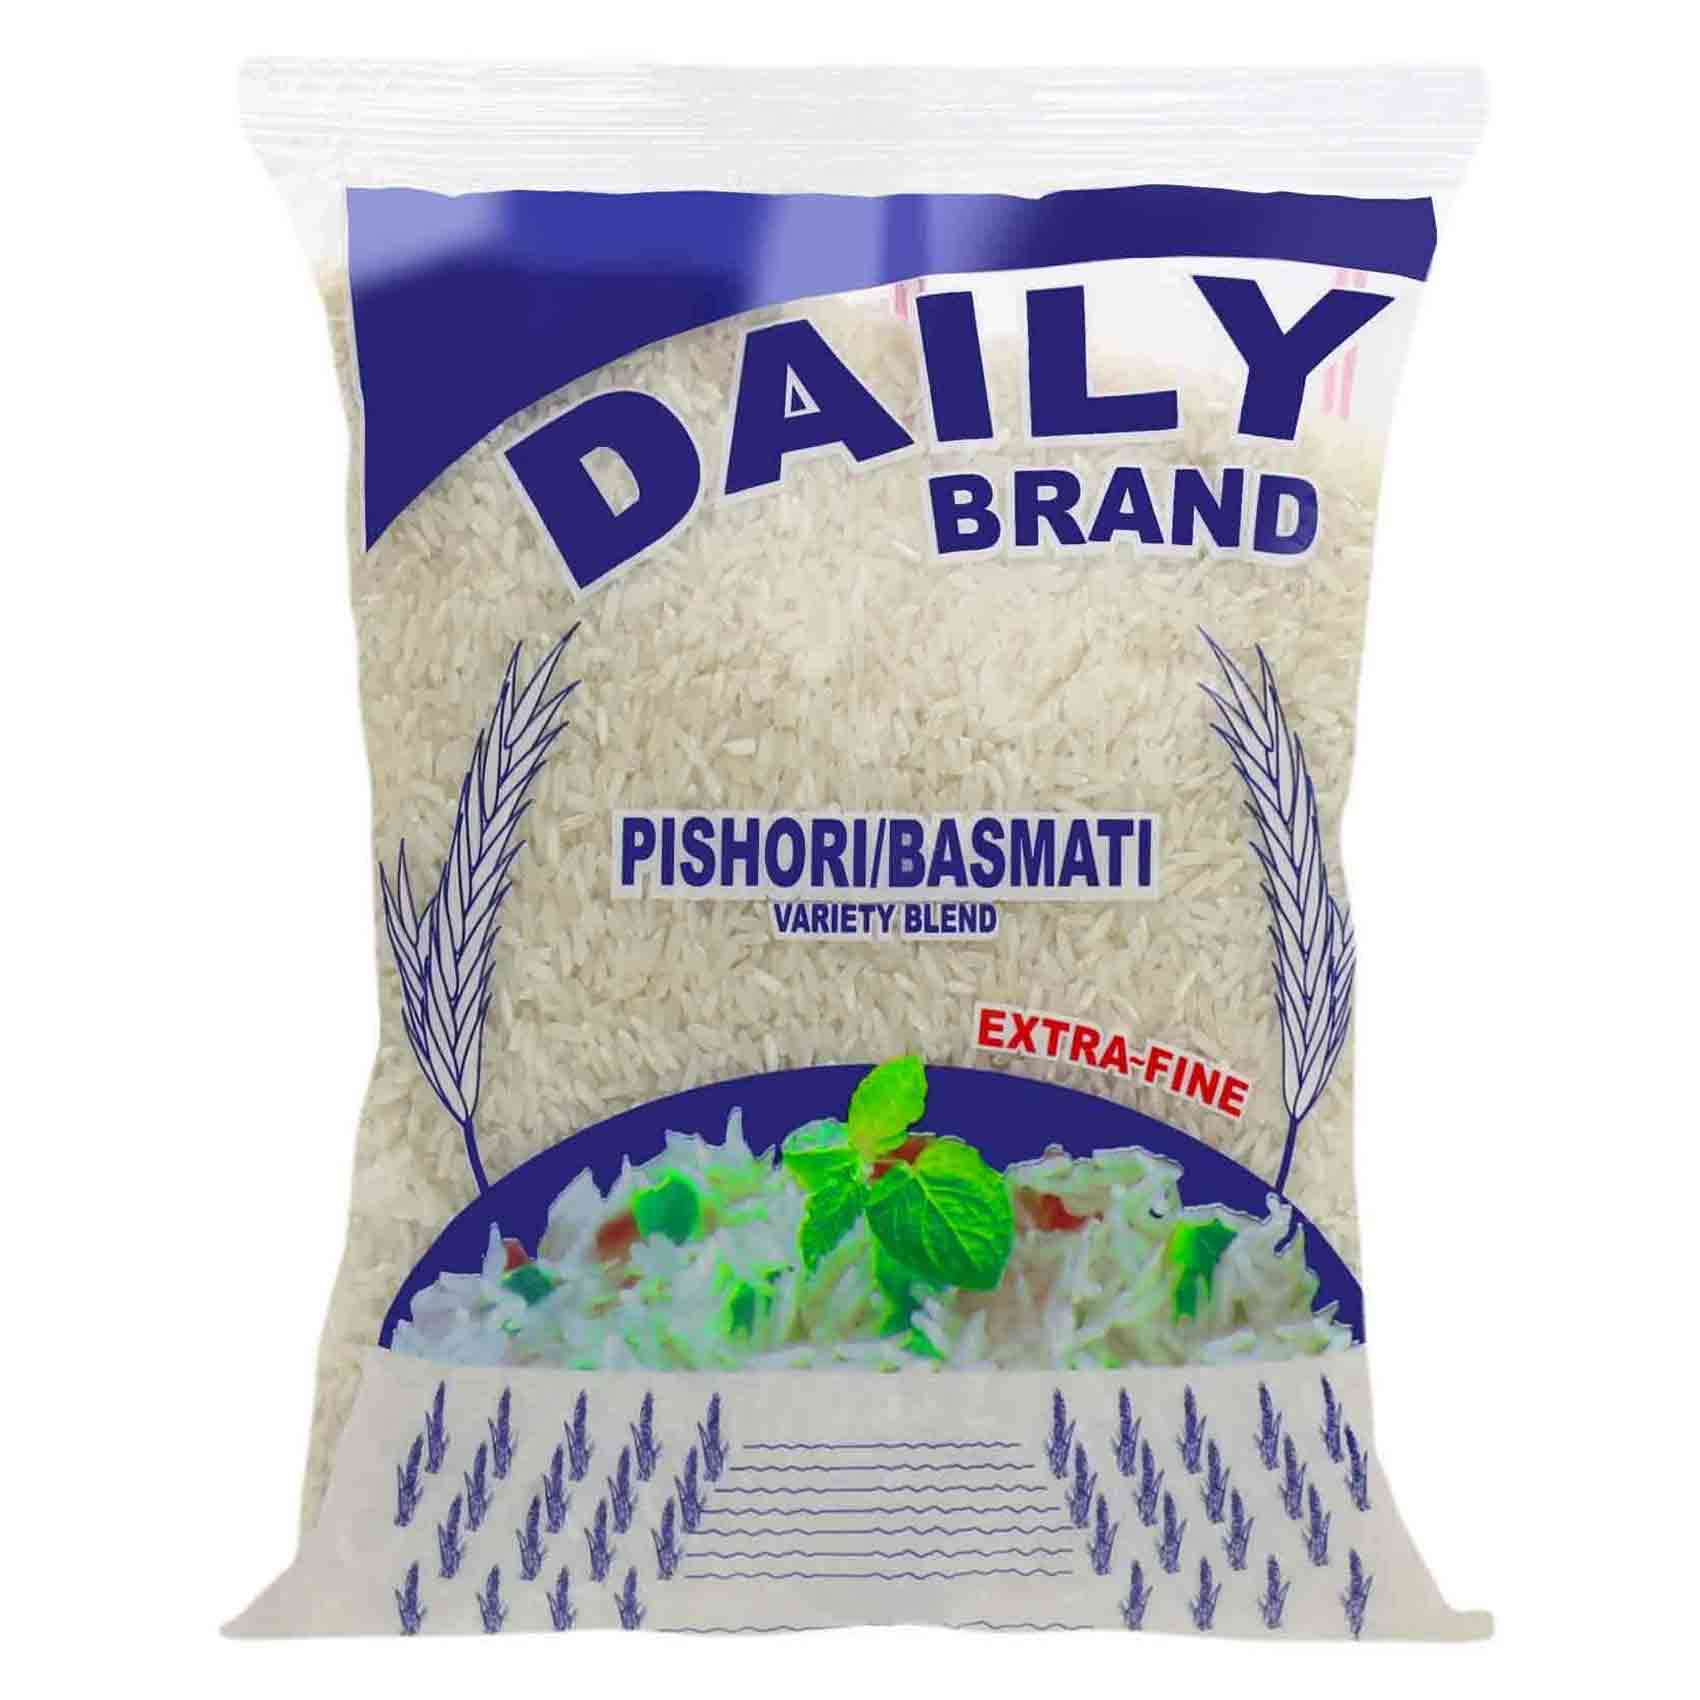 Kings Daily Brand Pishori Basmati Rice 2kg